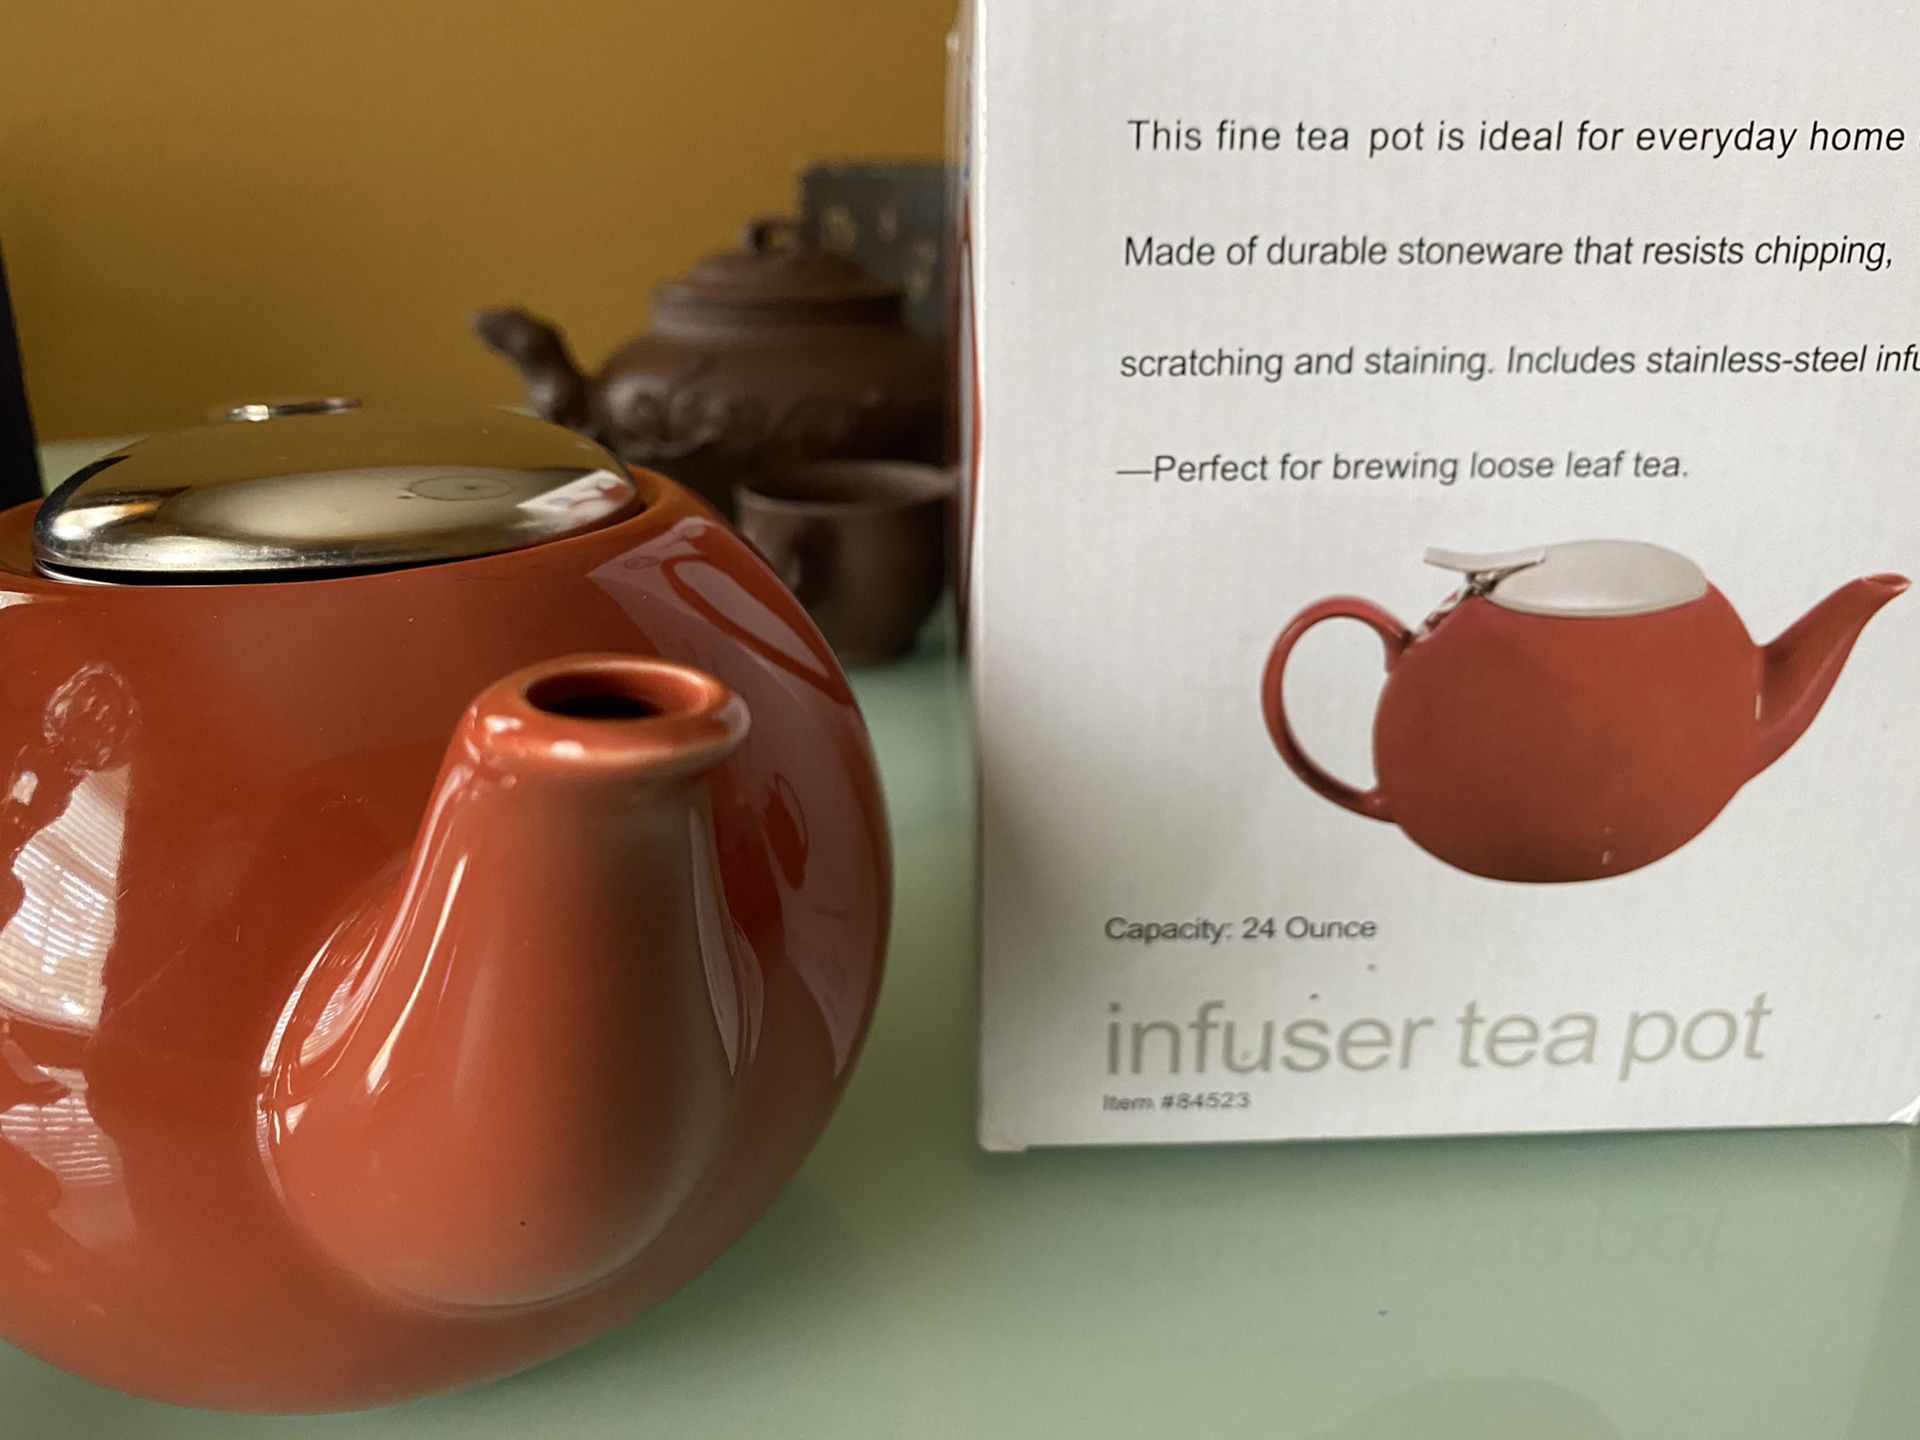 Infuser tea pot